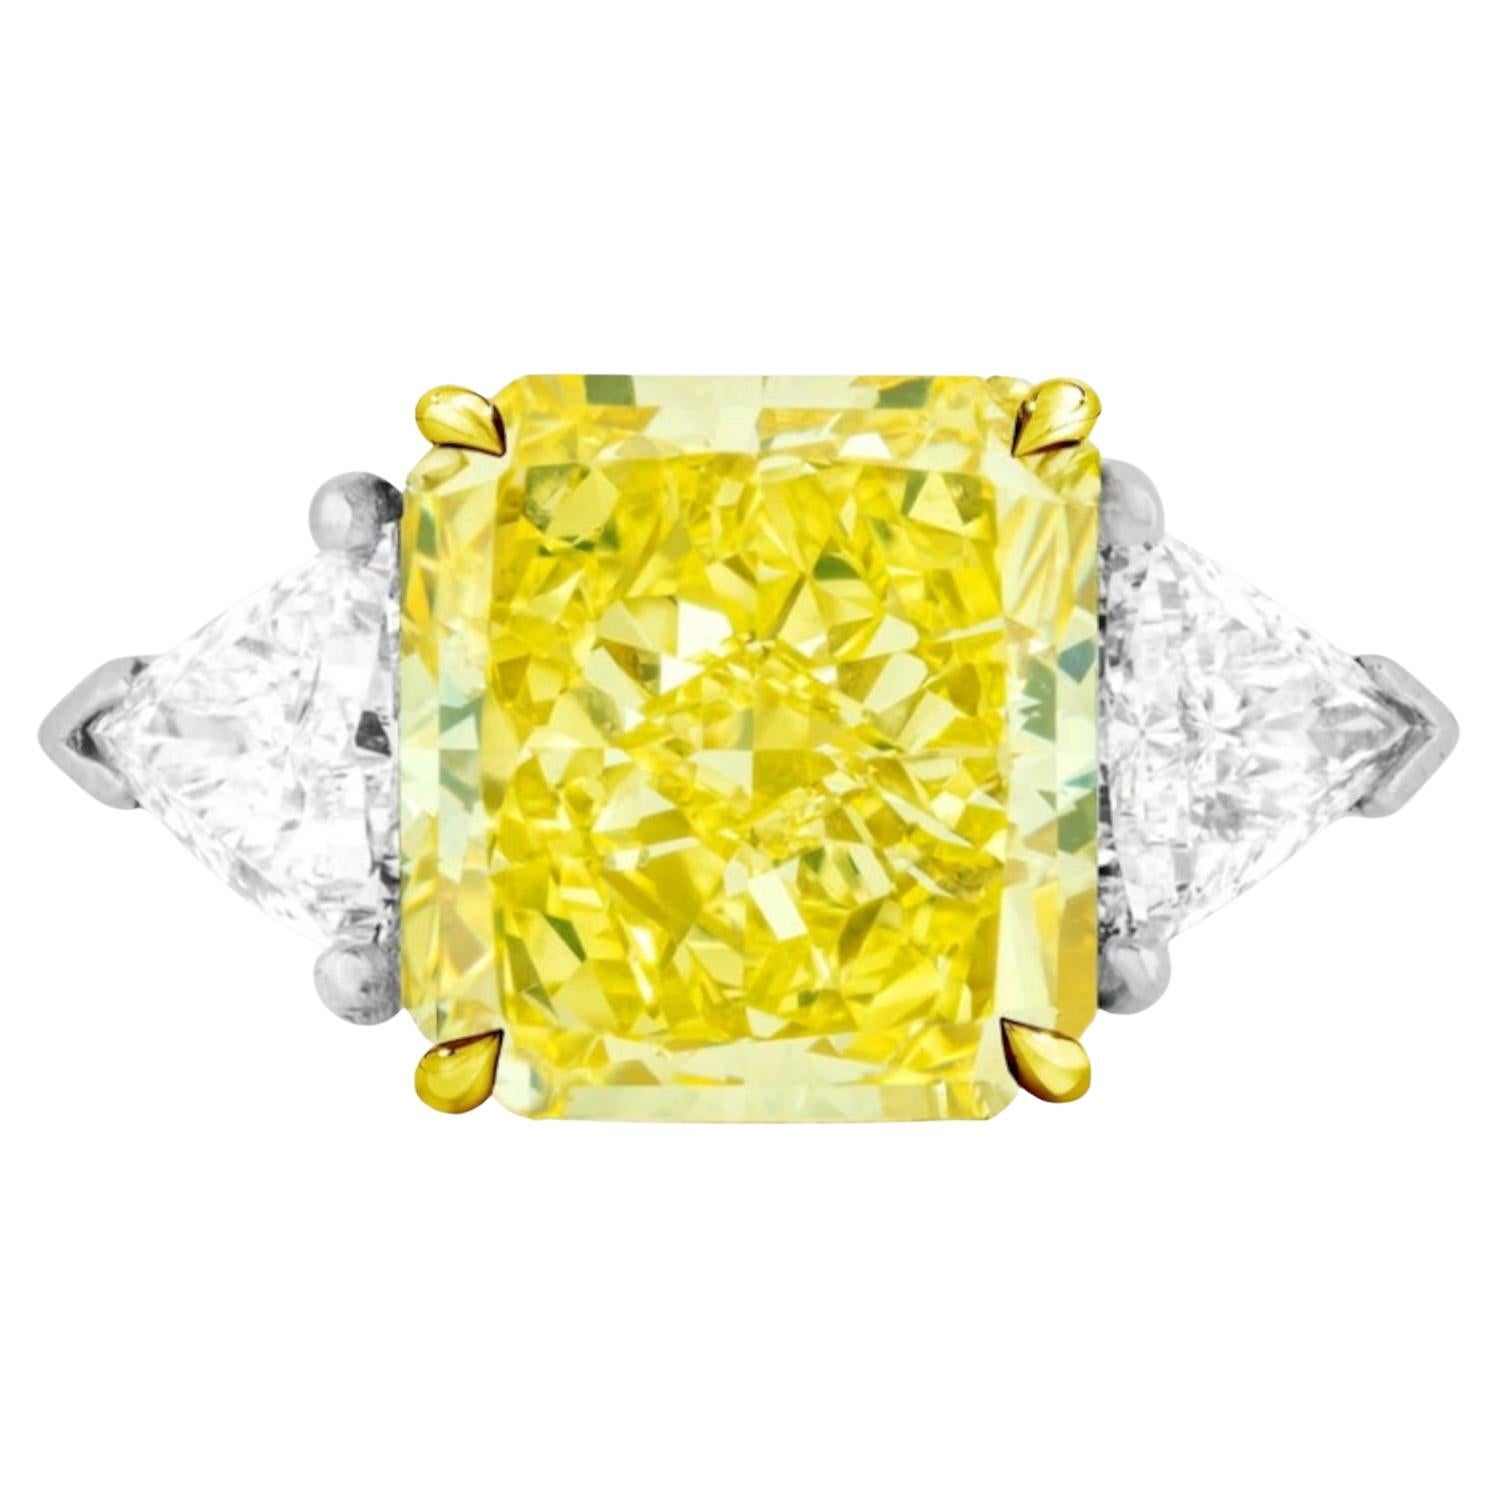 Are yellow diamonds real diamonds?